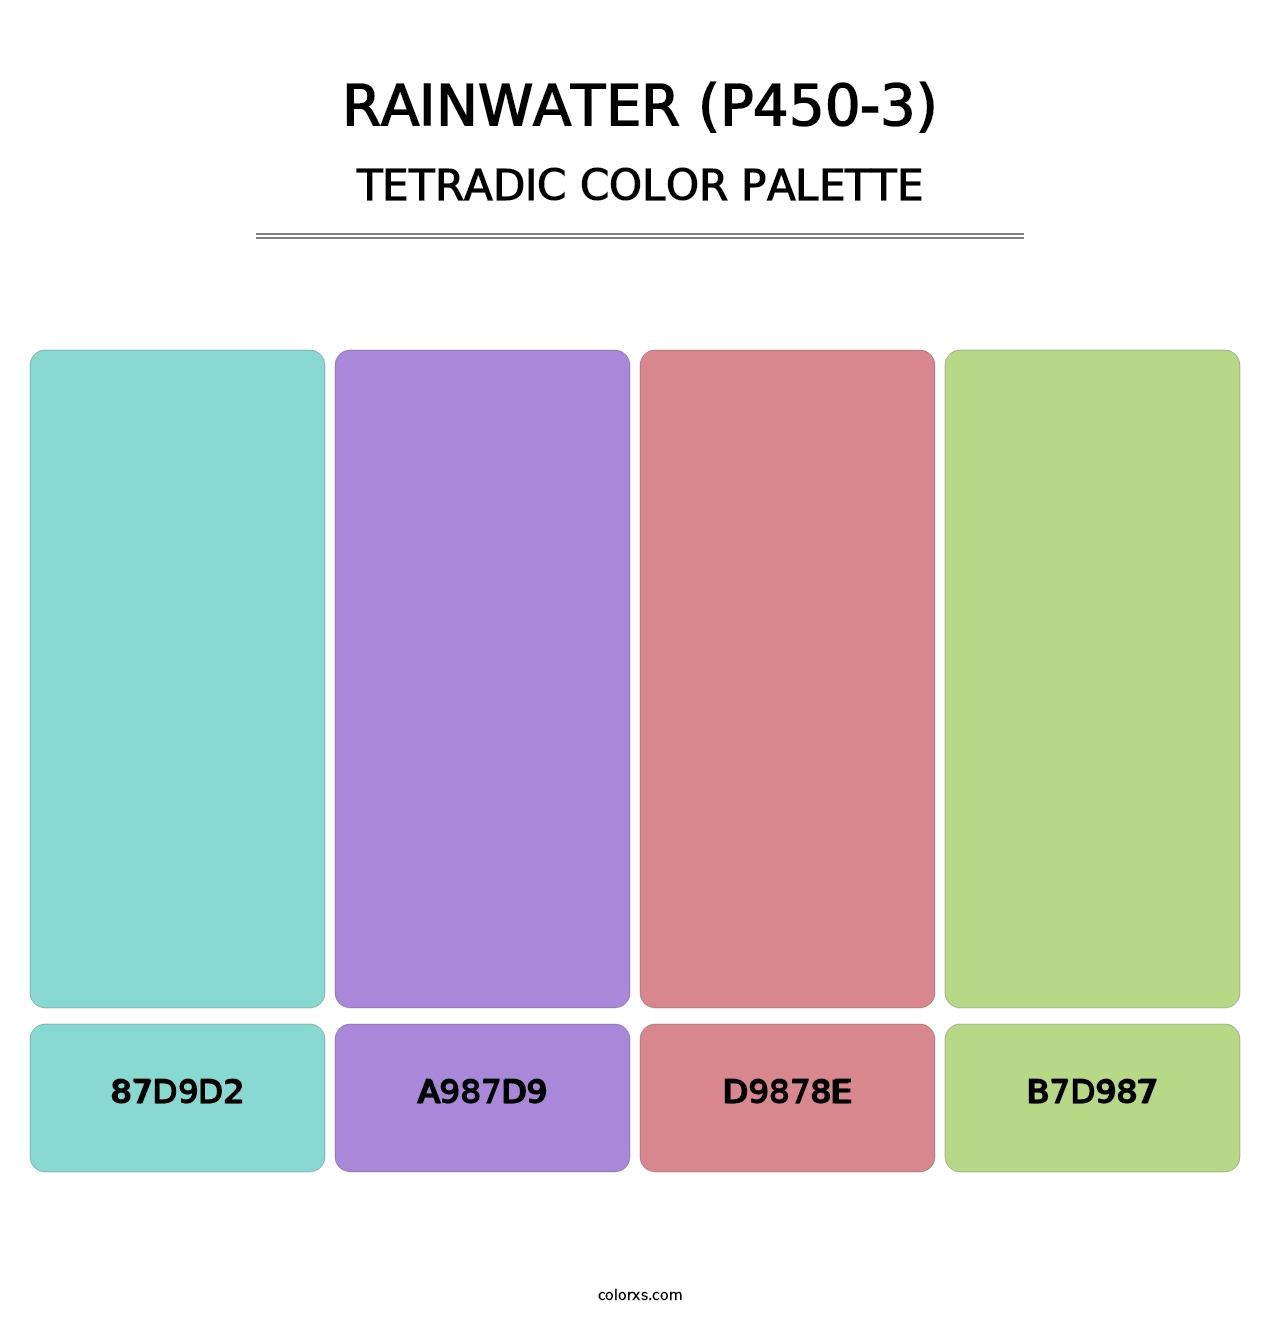 Rainwater (P450-3) - Tetradic Color Palette